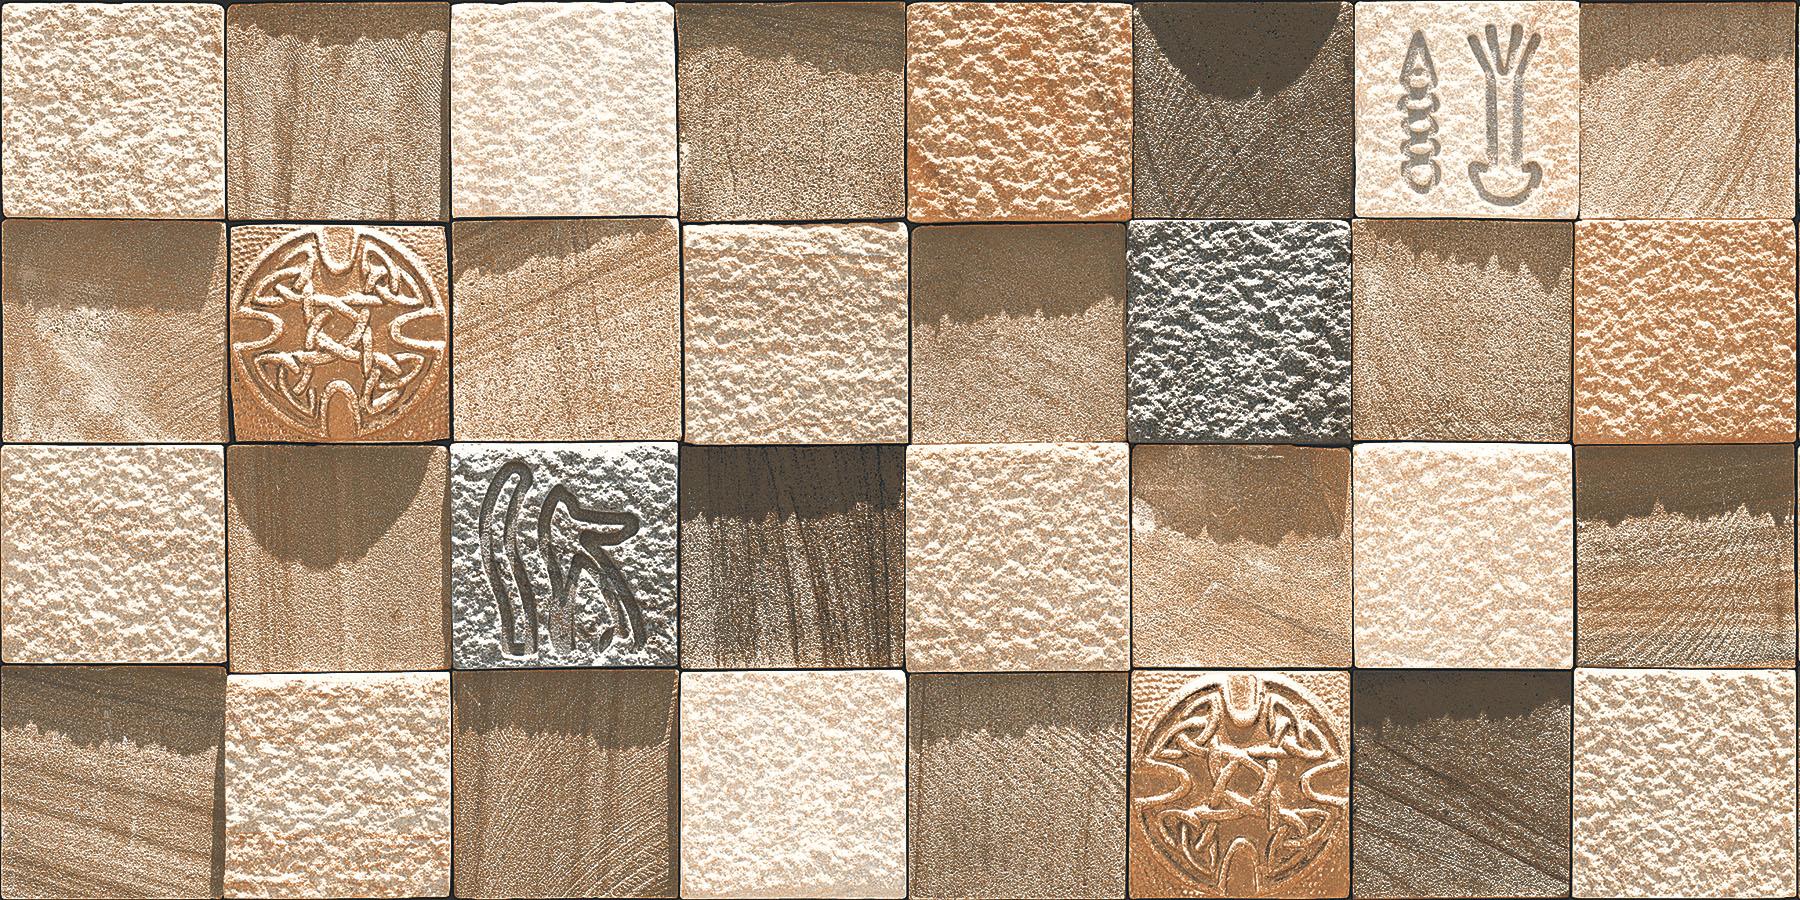 Glass Mosaic Tiles for Bathroom Tiles, Living Room Tiles, Elevation Tiles, Accent Tiles, Hospital Tiles, Bar/Restaurant, Commercial/Office, Outdoor Area, School & Collages